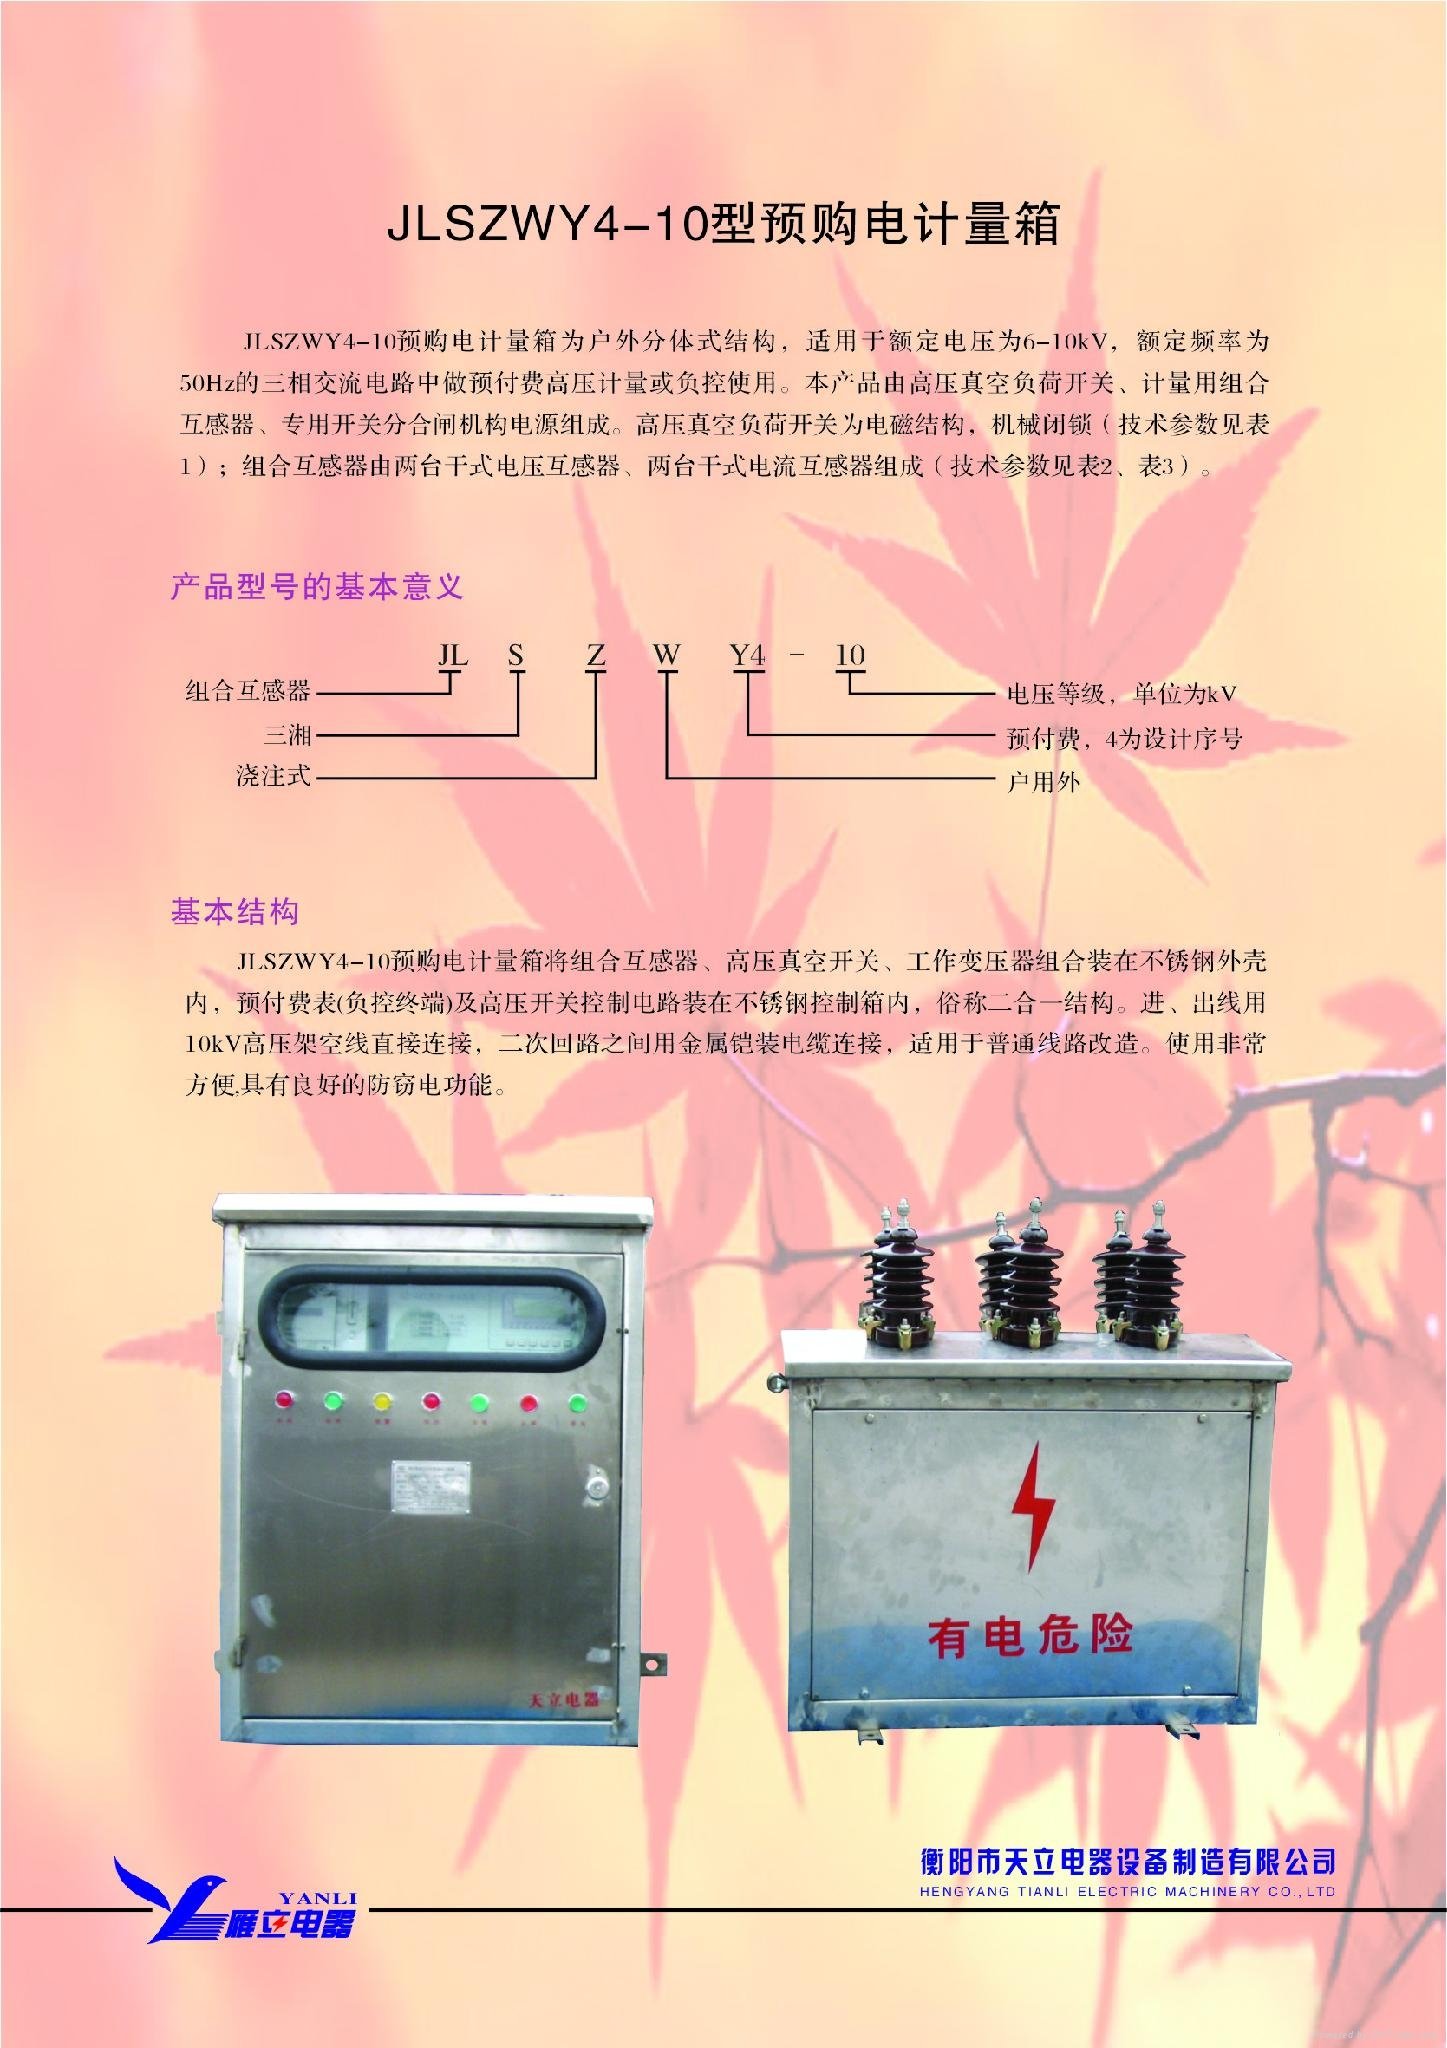 SJWLY4-10型预购电计量柜